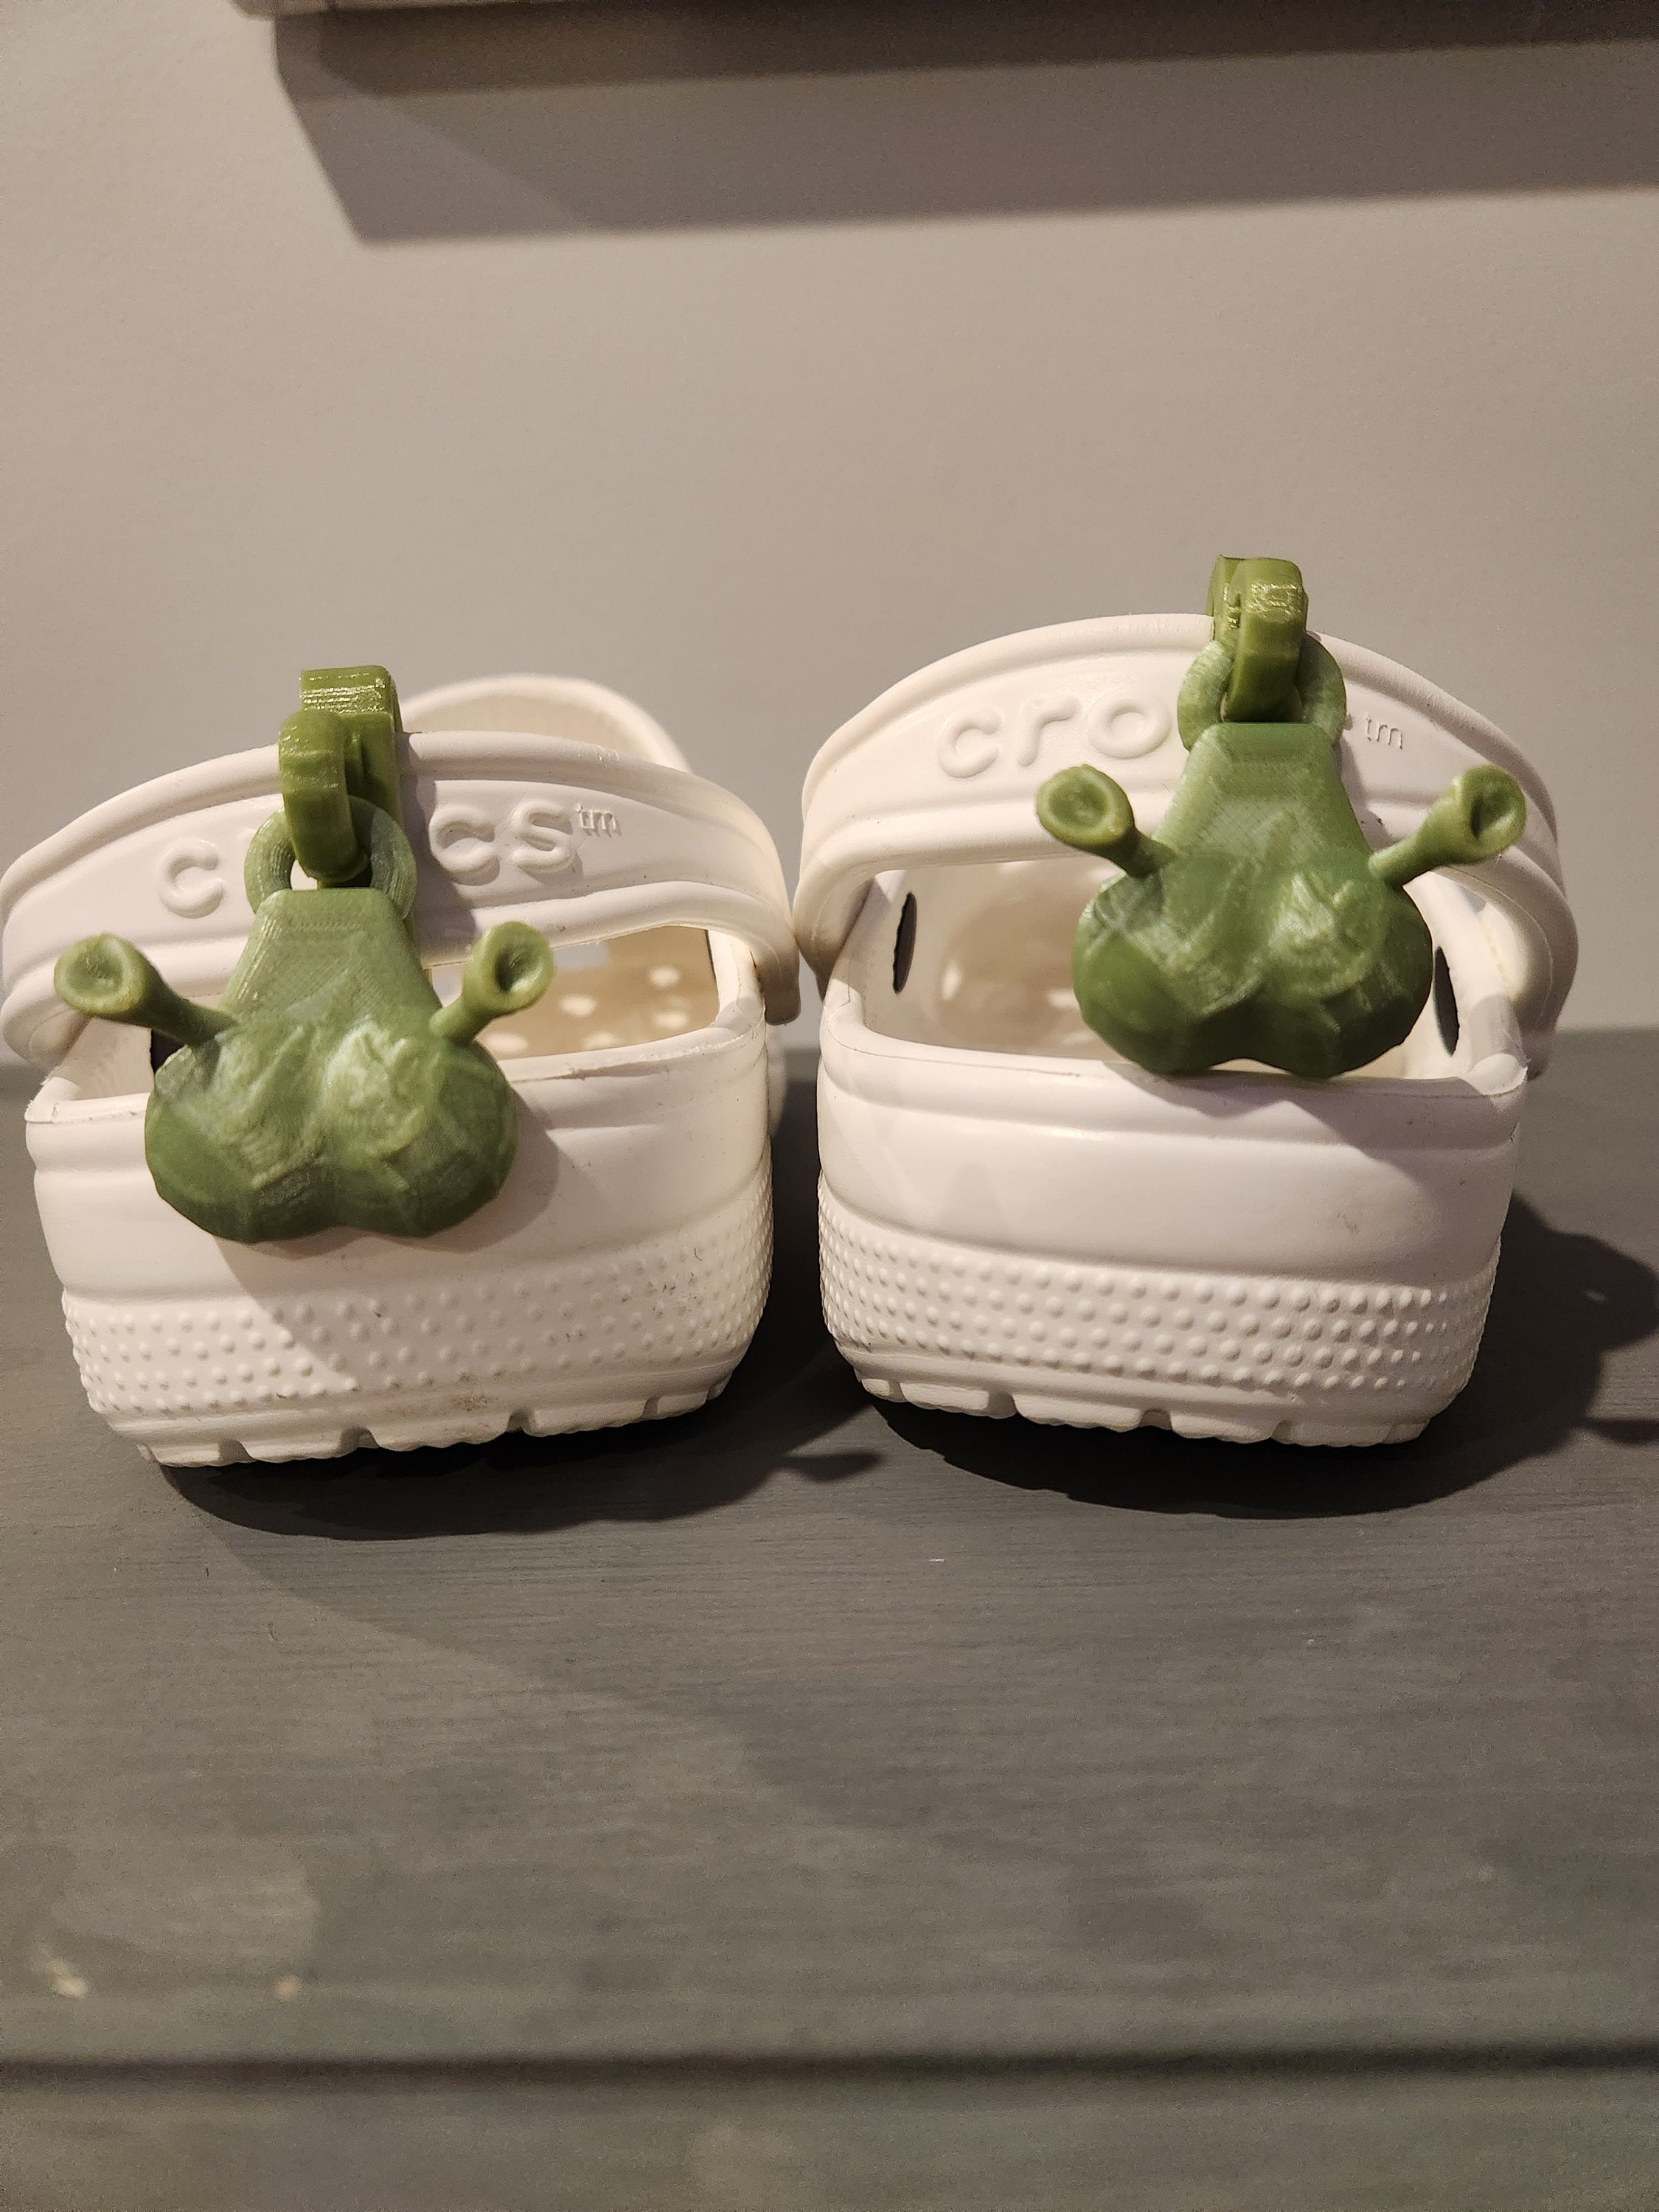 Shrek crocs: Clog makers announce crossover shoe